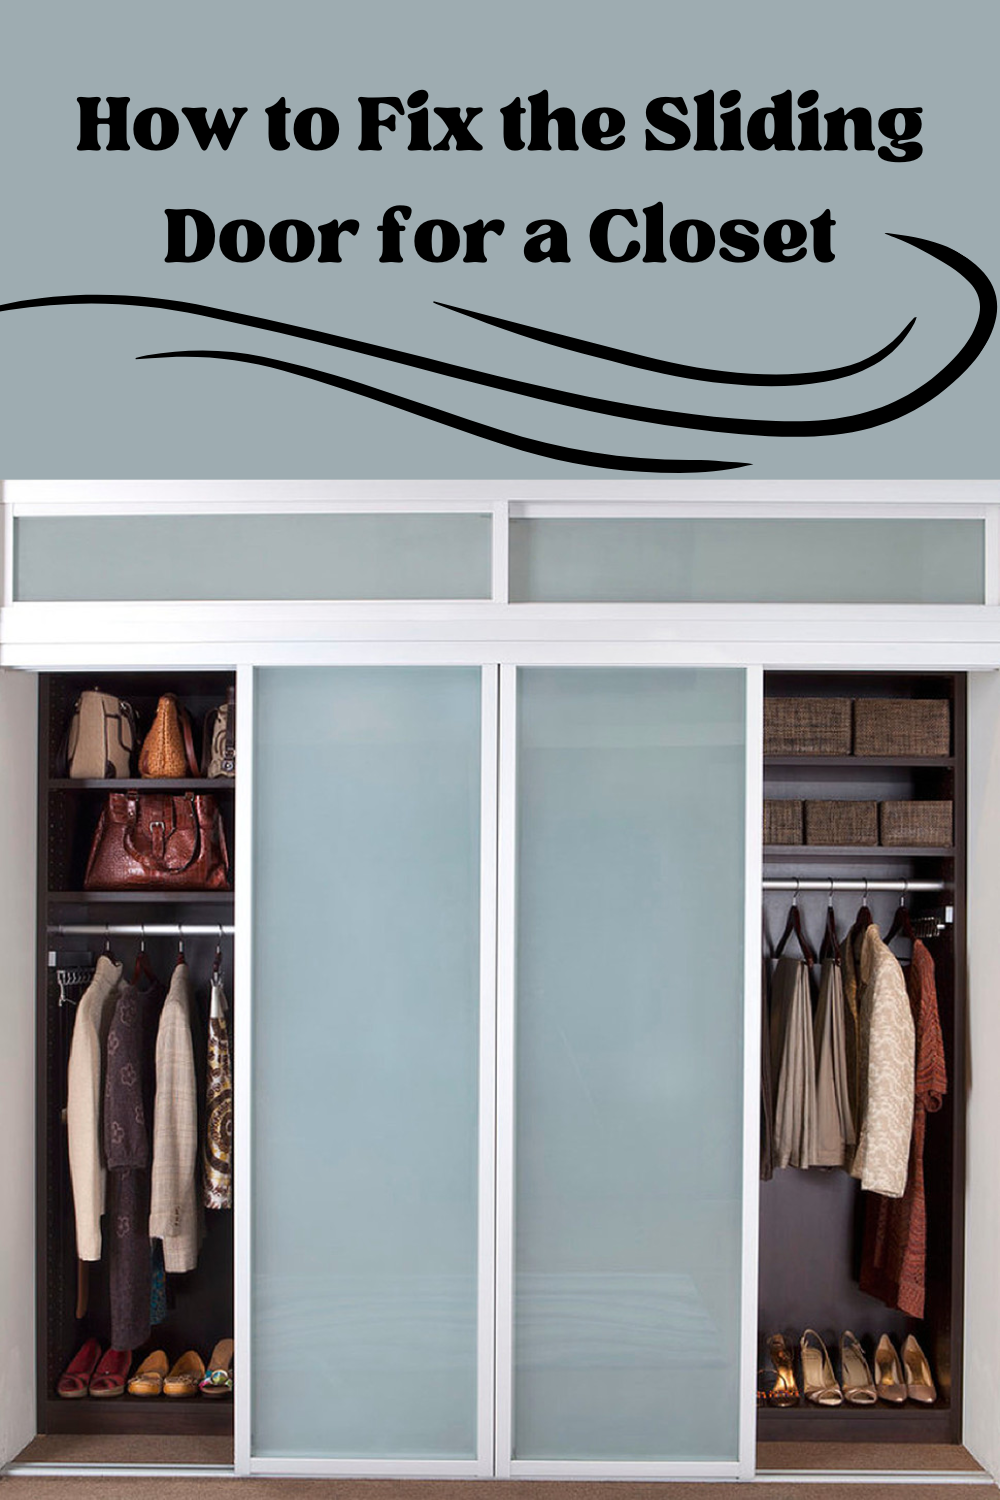 How to Fix the Sliding Door for a Closet